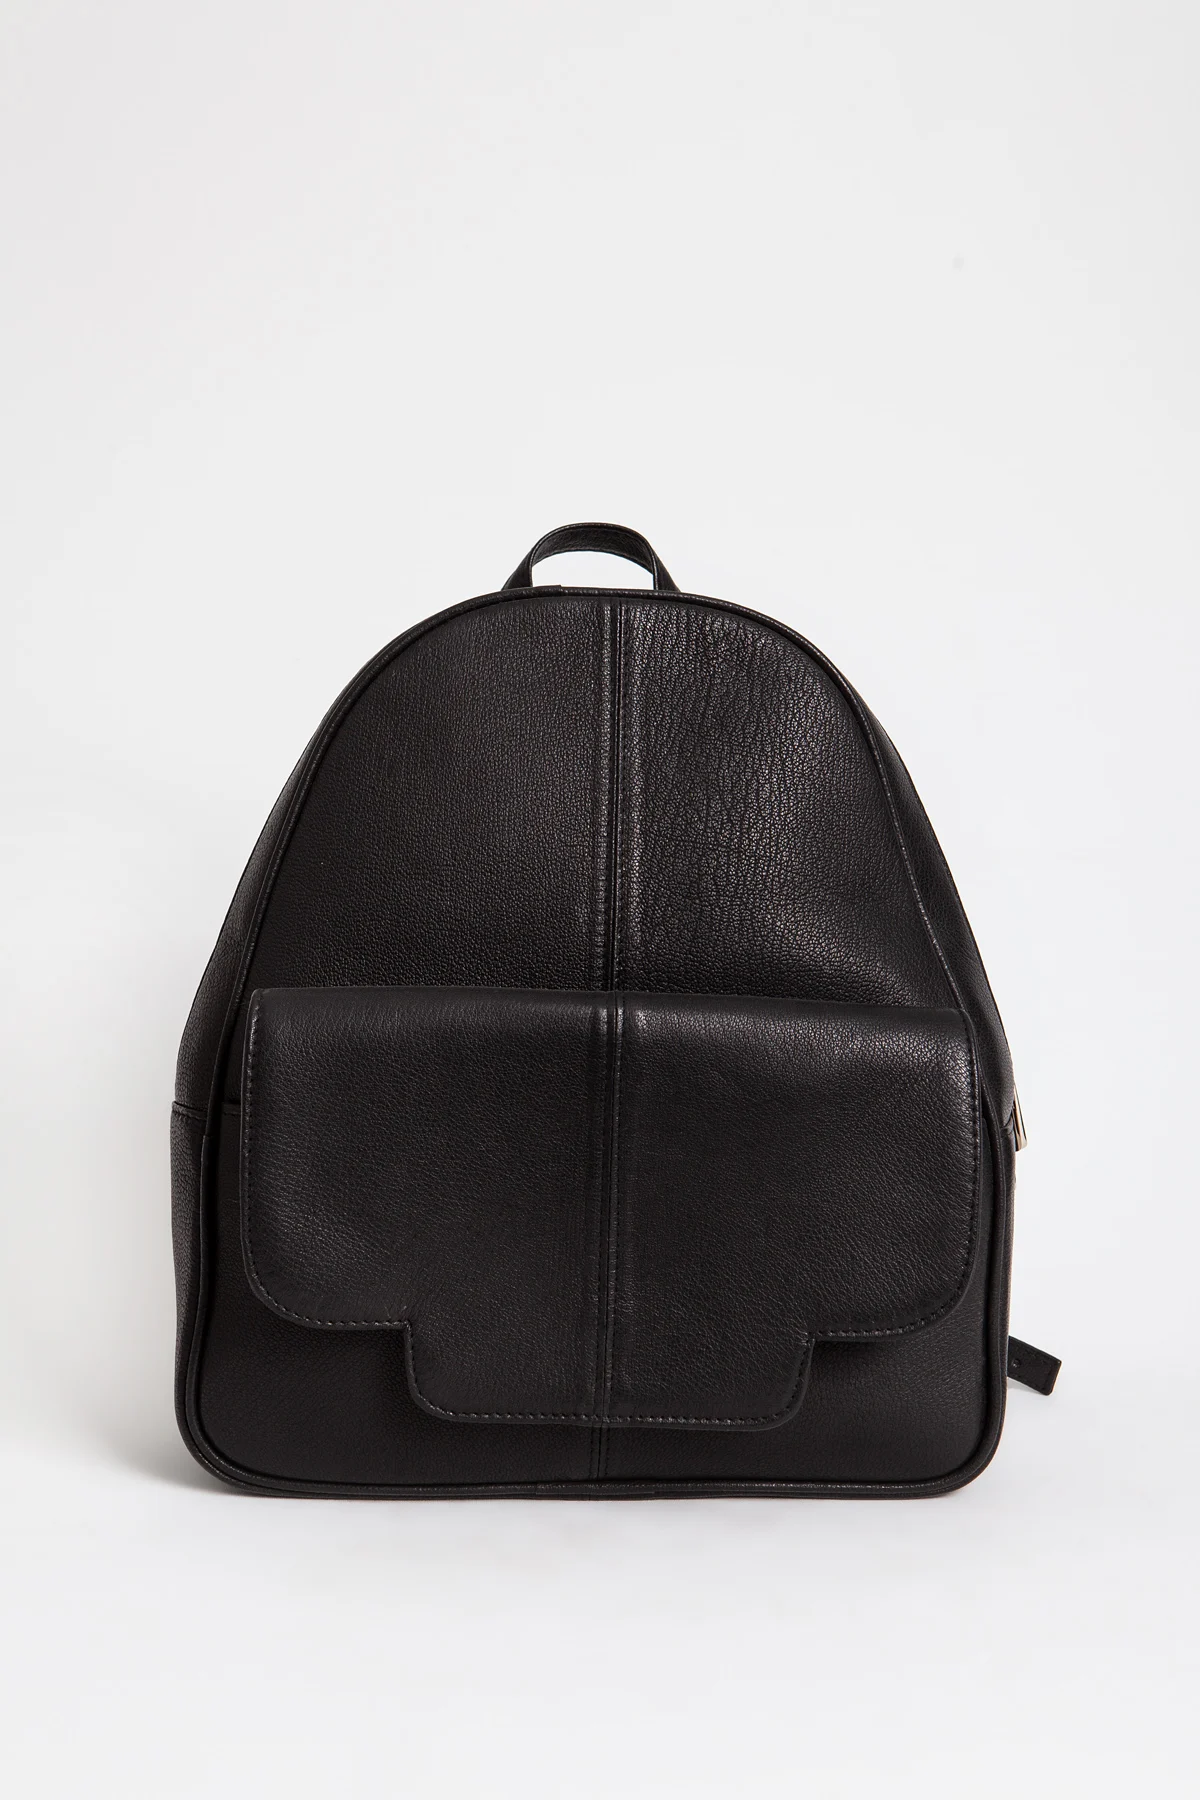 DC-2060 Man Women Quality Leather Backpacks Fashion Casual Daypack Black Vintage Original Laptop School Bag Rucksack 3 Color